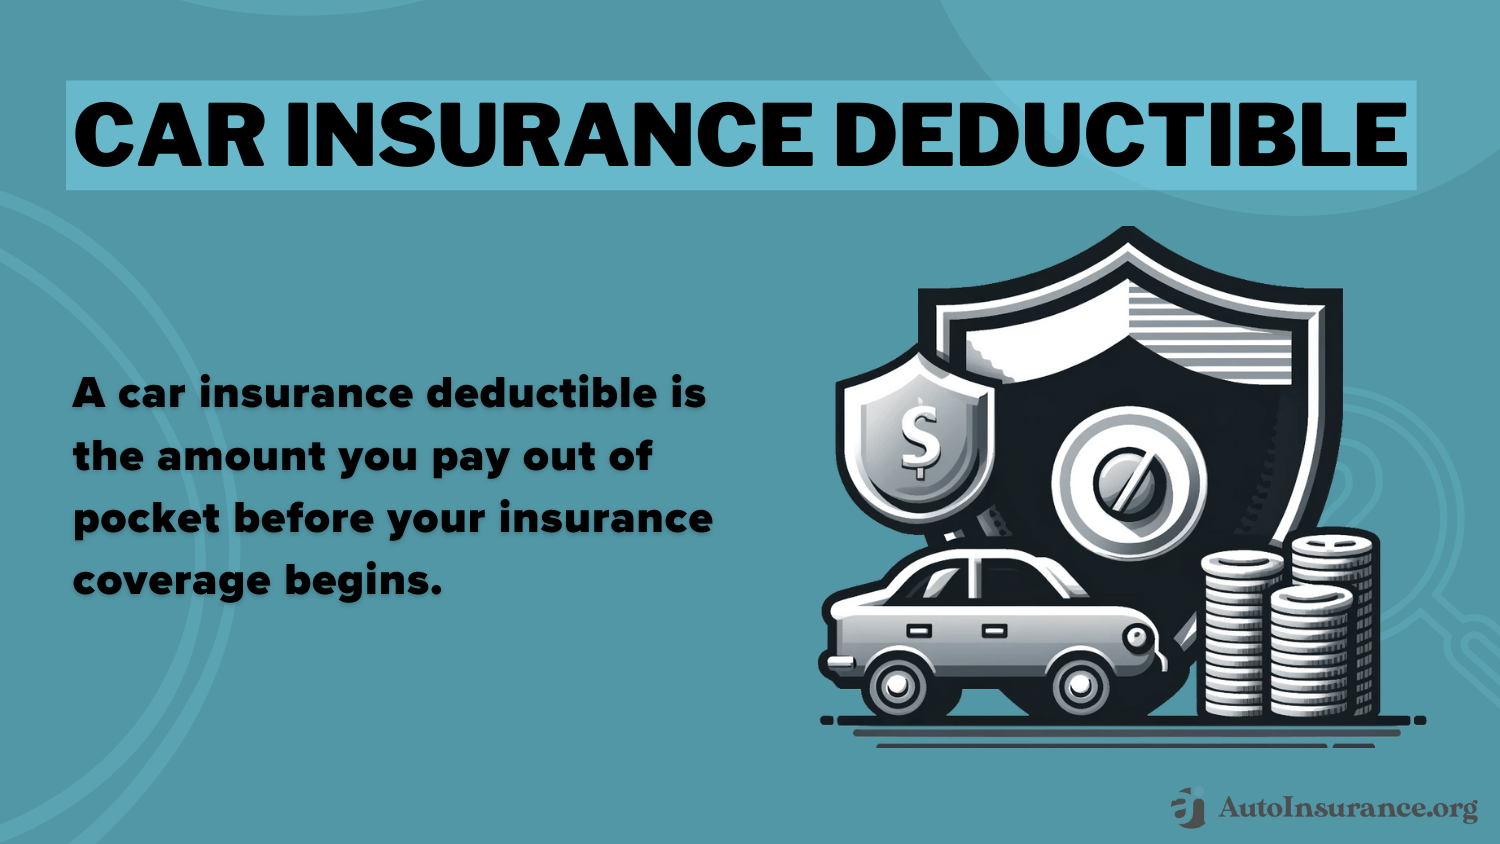 Collision Auto Insurance: Car Insurance Deductible Definition Card